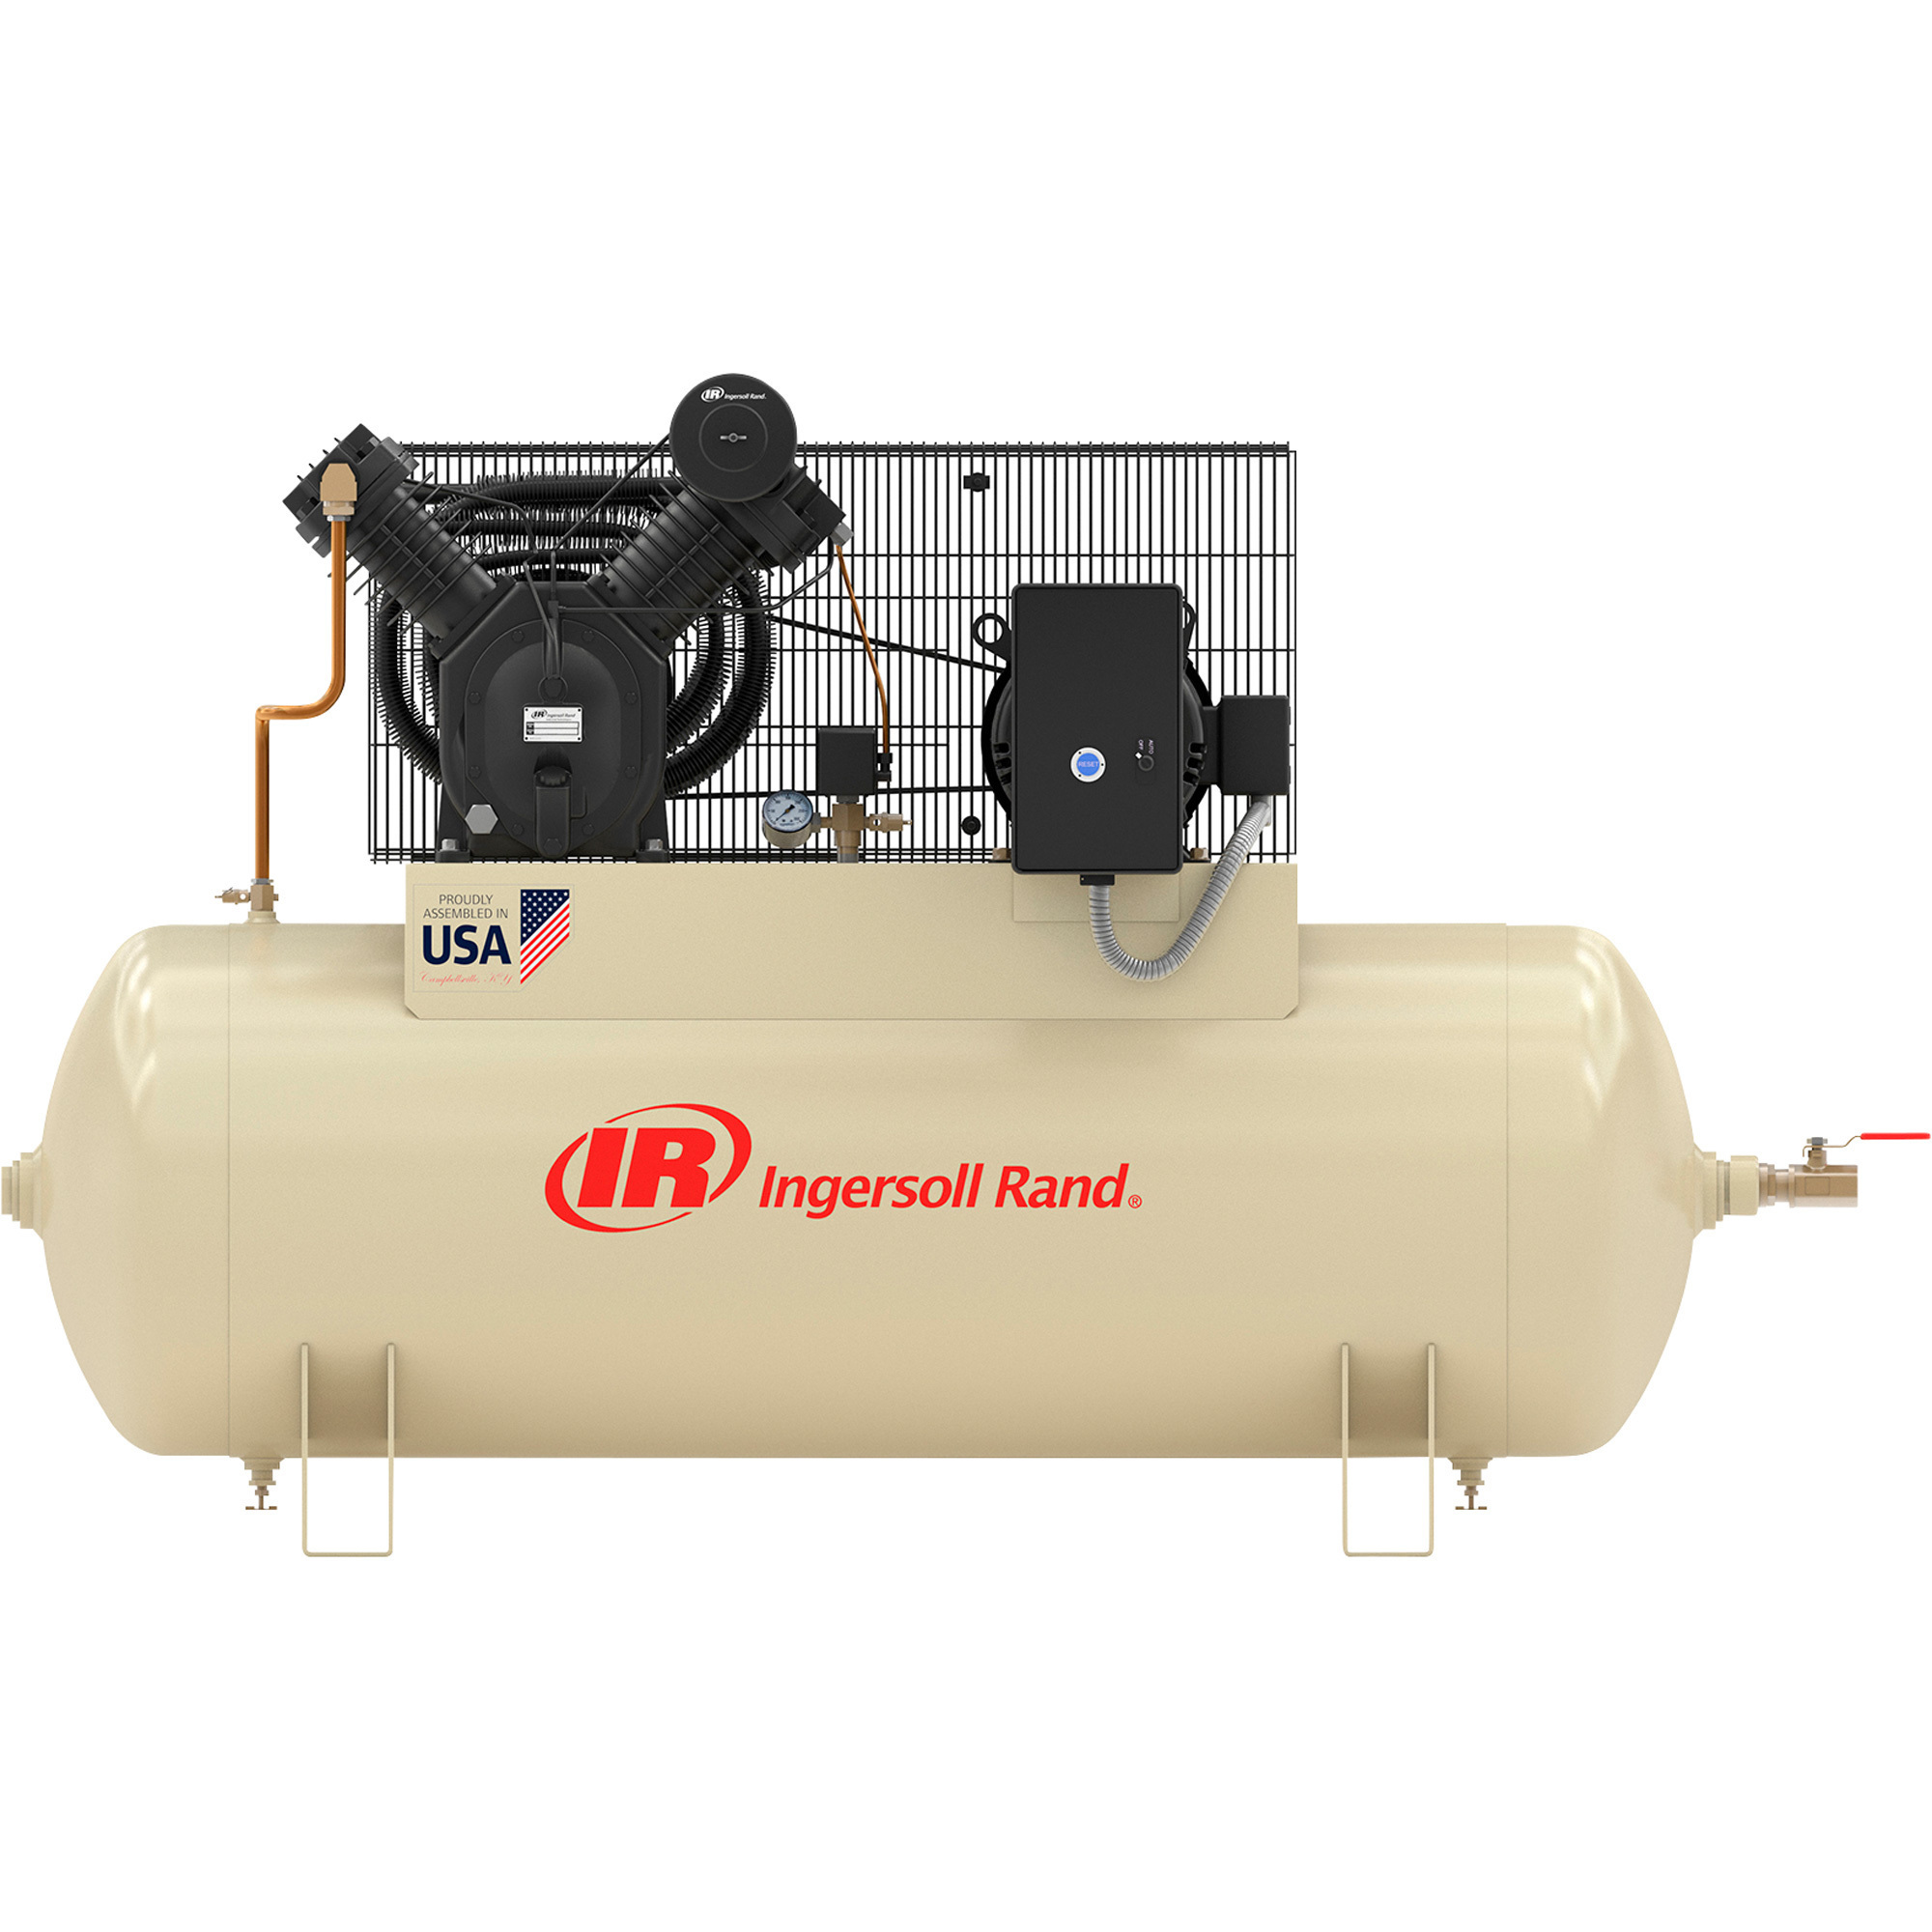 Ingersoll Rand Type-30 Reciprocating Air Compressor, 15 HP, 460 Volt, 3 Phase, 120 Gallon Horizontal, Model 7100E15-V